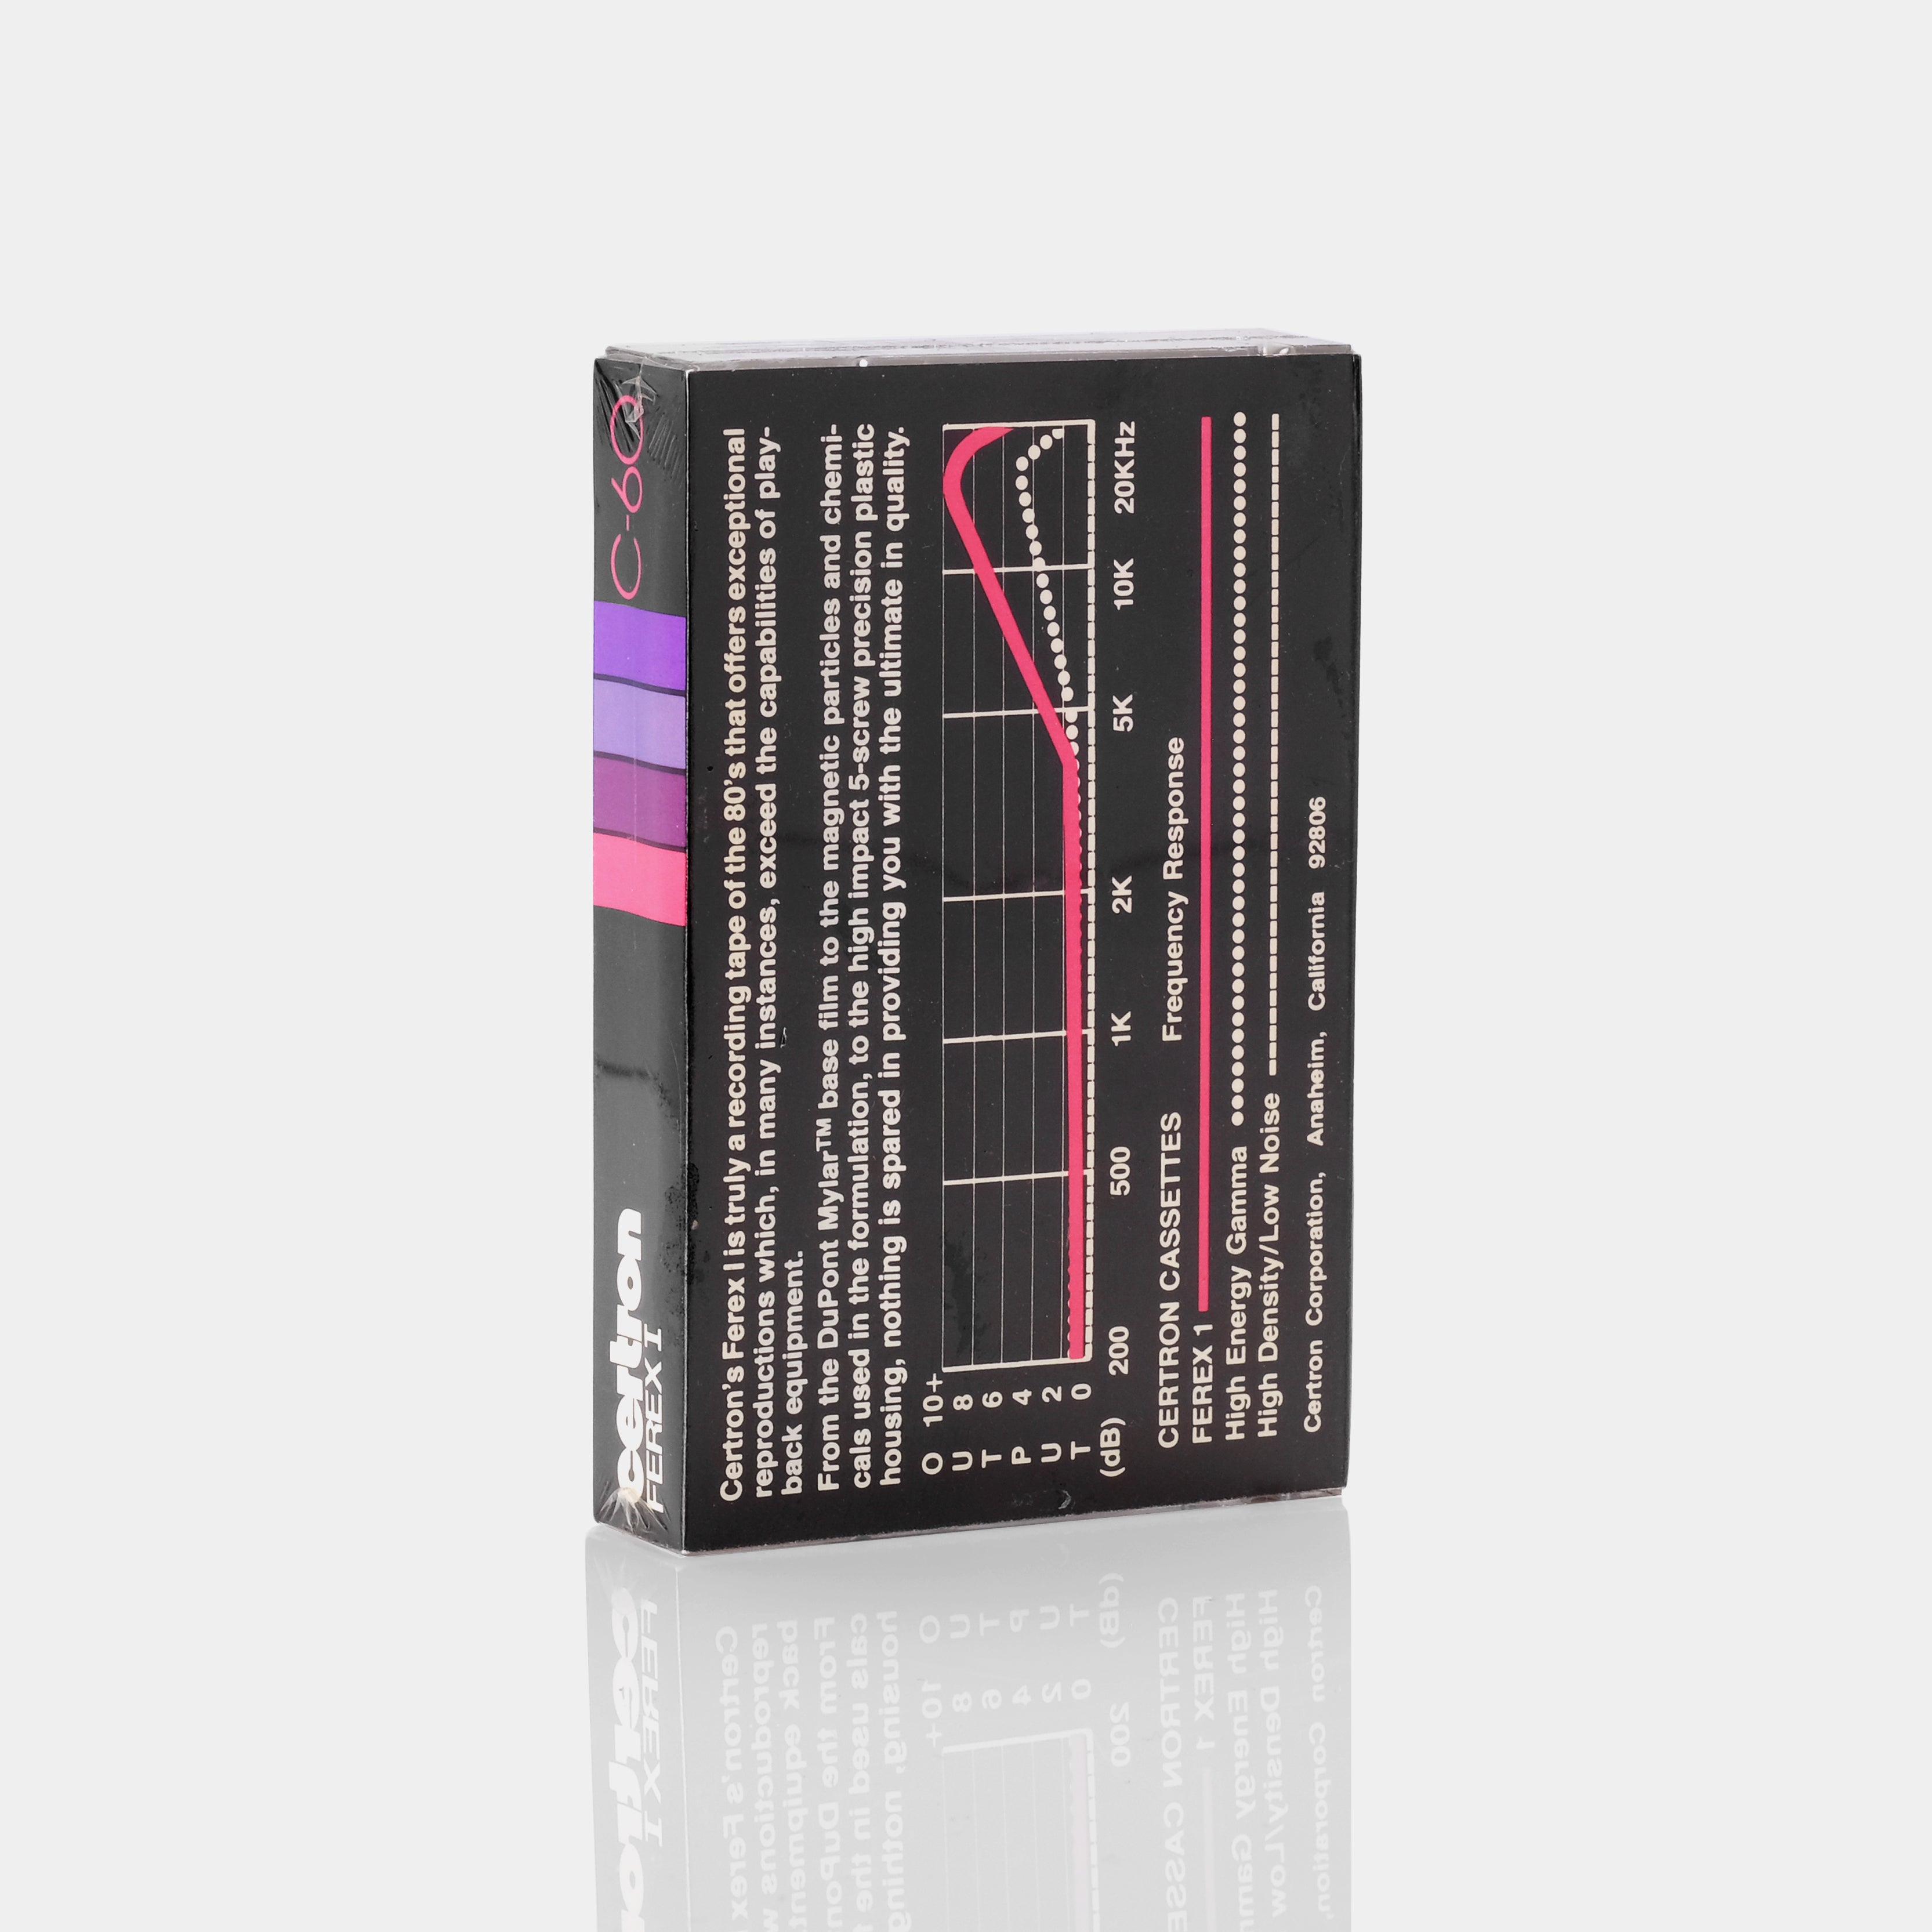 Certron Ferex I C-60 Blank Recordable Cassette Tape